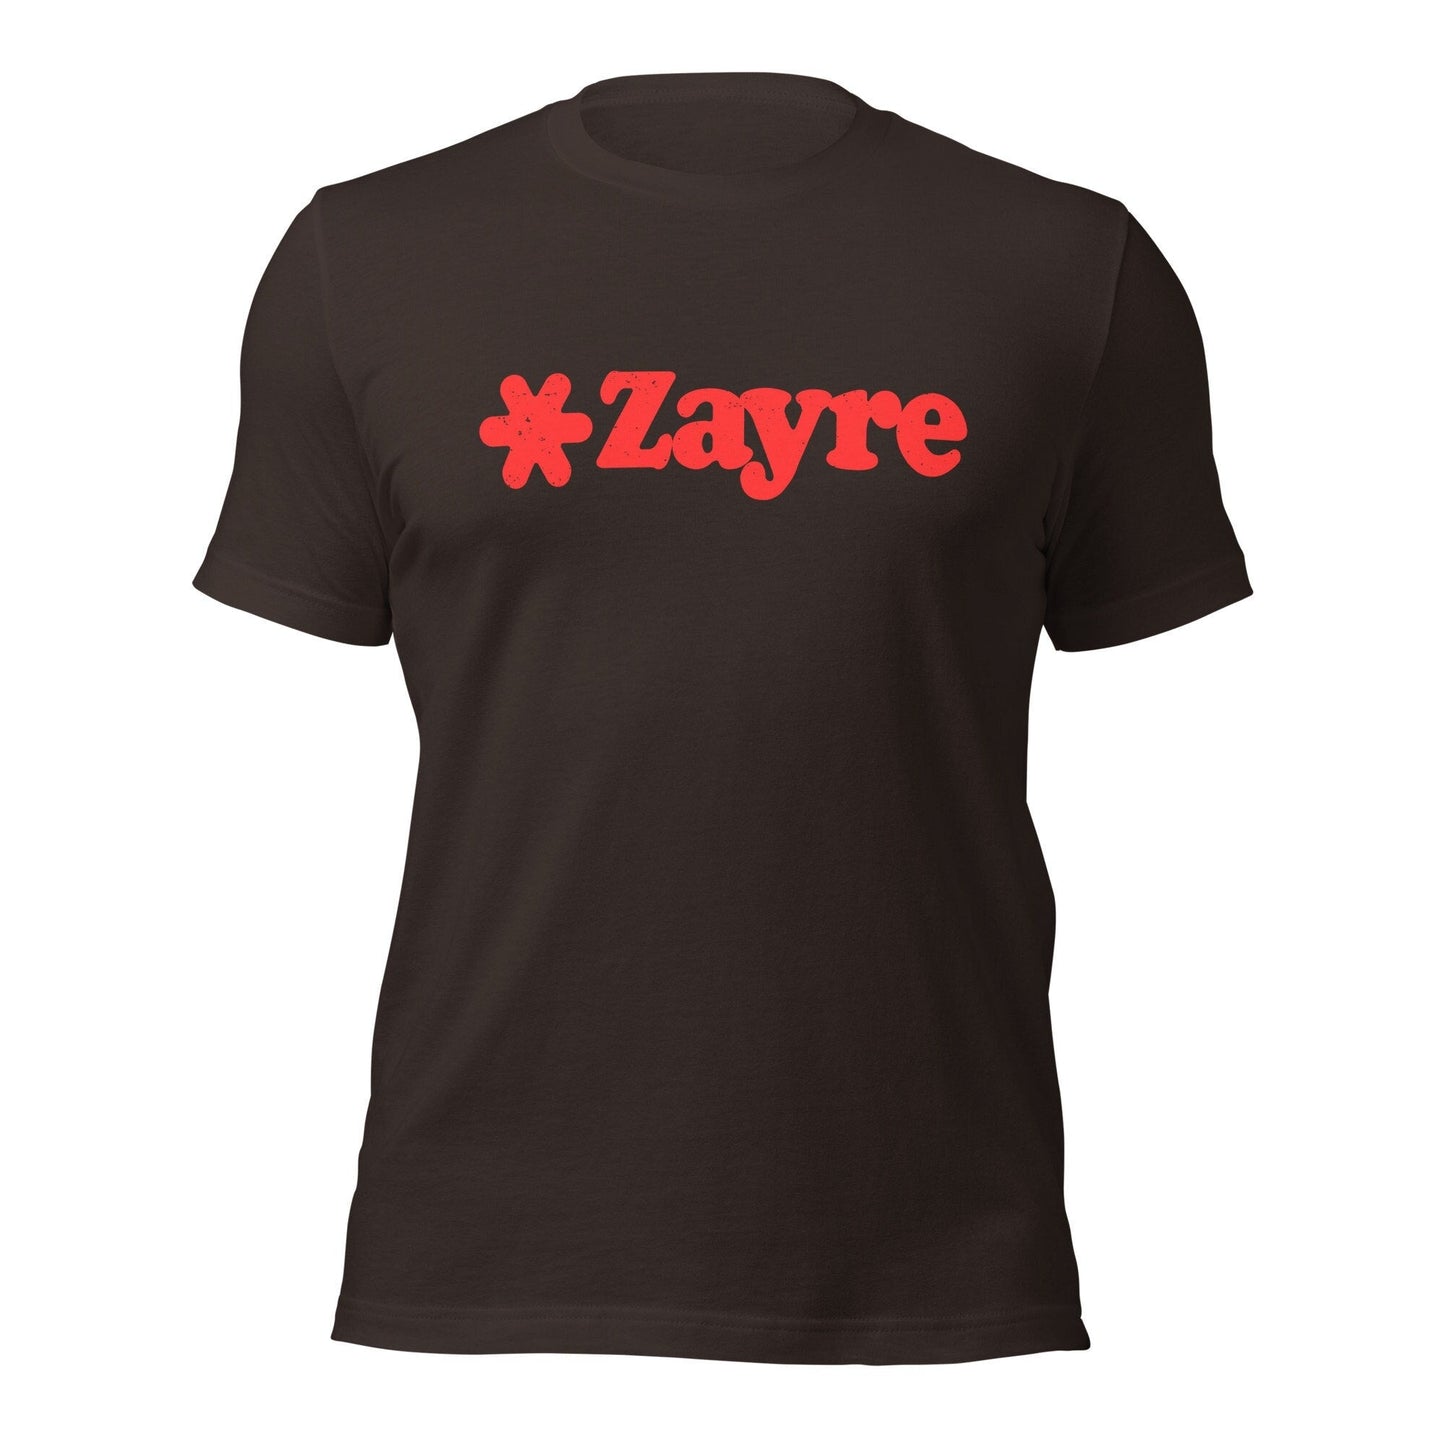 Zayre Retro 1980s T-shirt | Vintage Mens & Women's Old School Tee